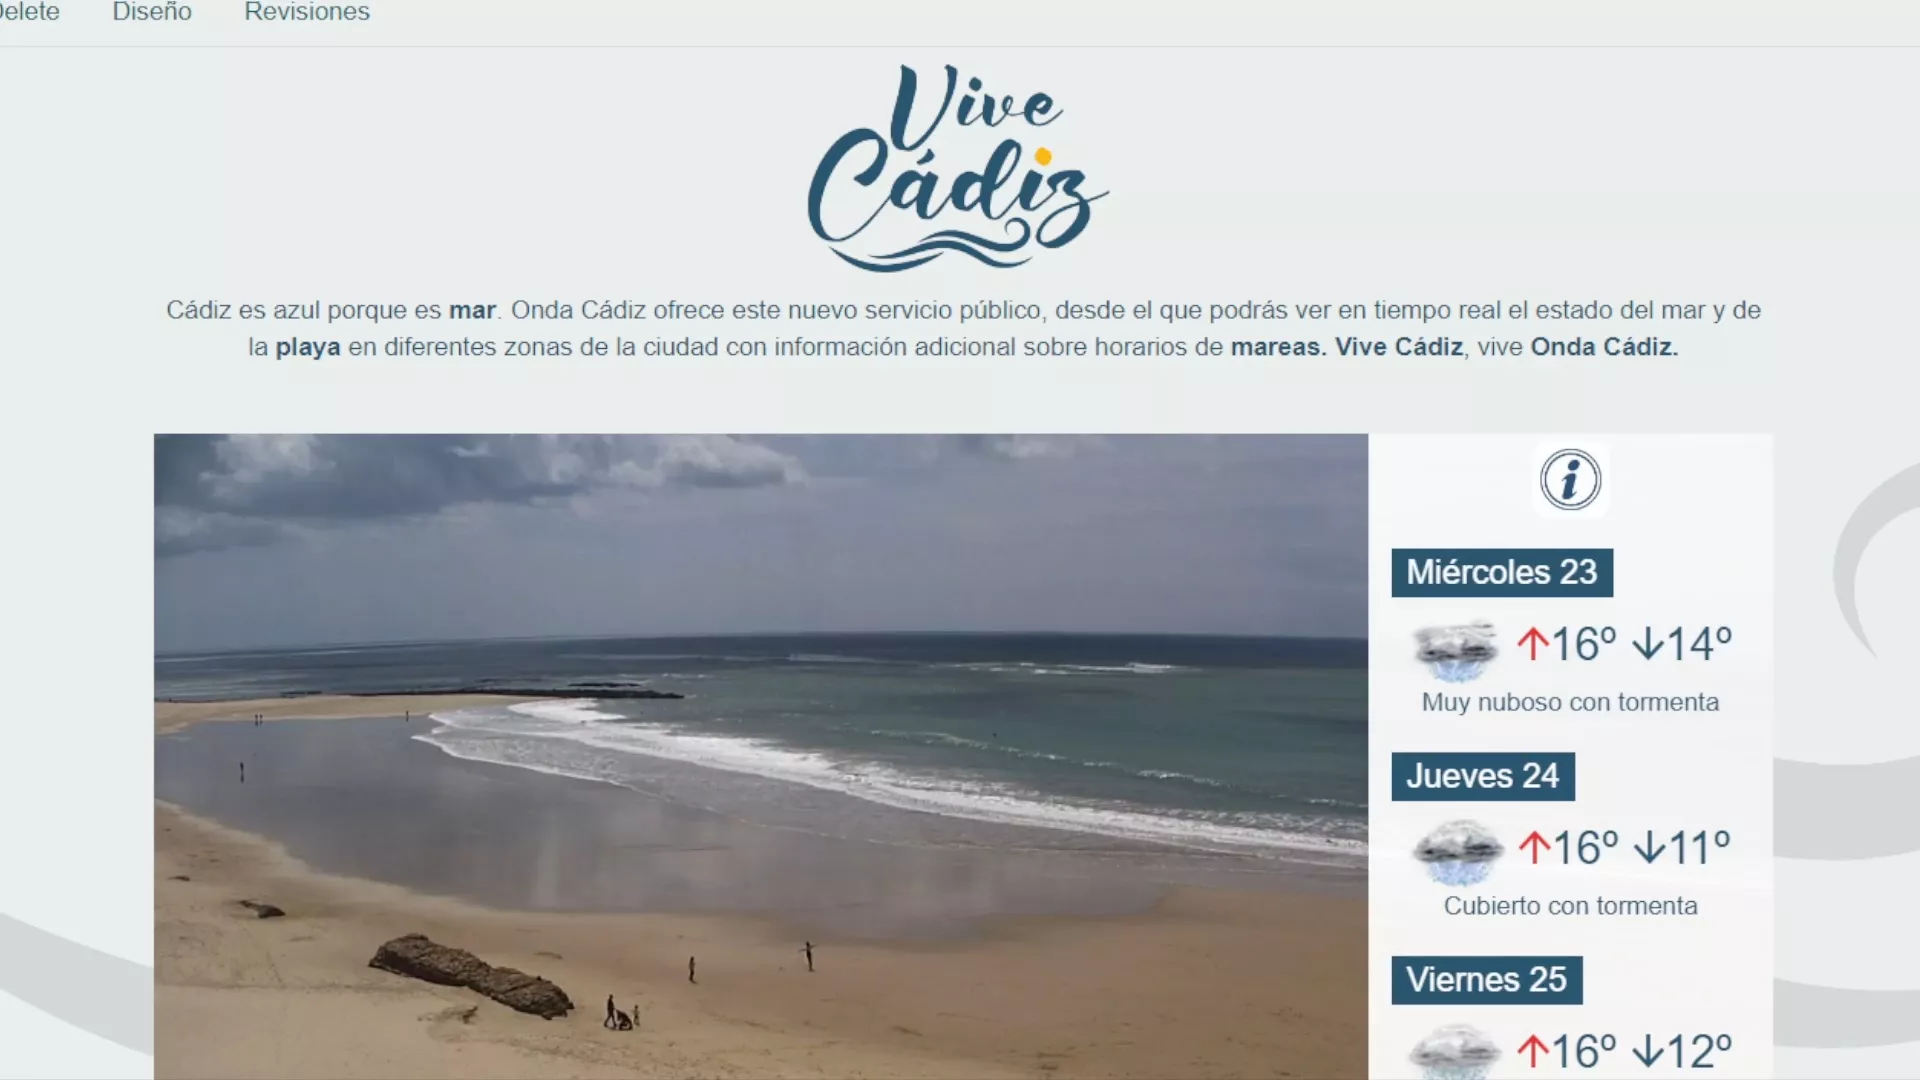 El nuevo servicio "Vive Cádiz" que incorpora la web de Onda Cádiz